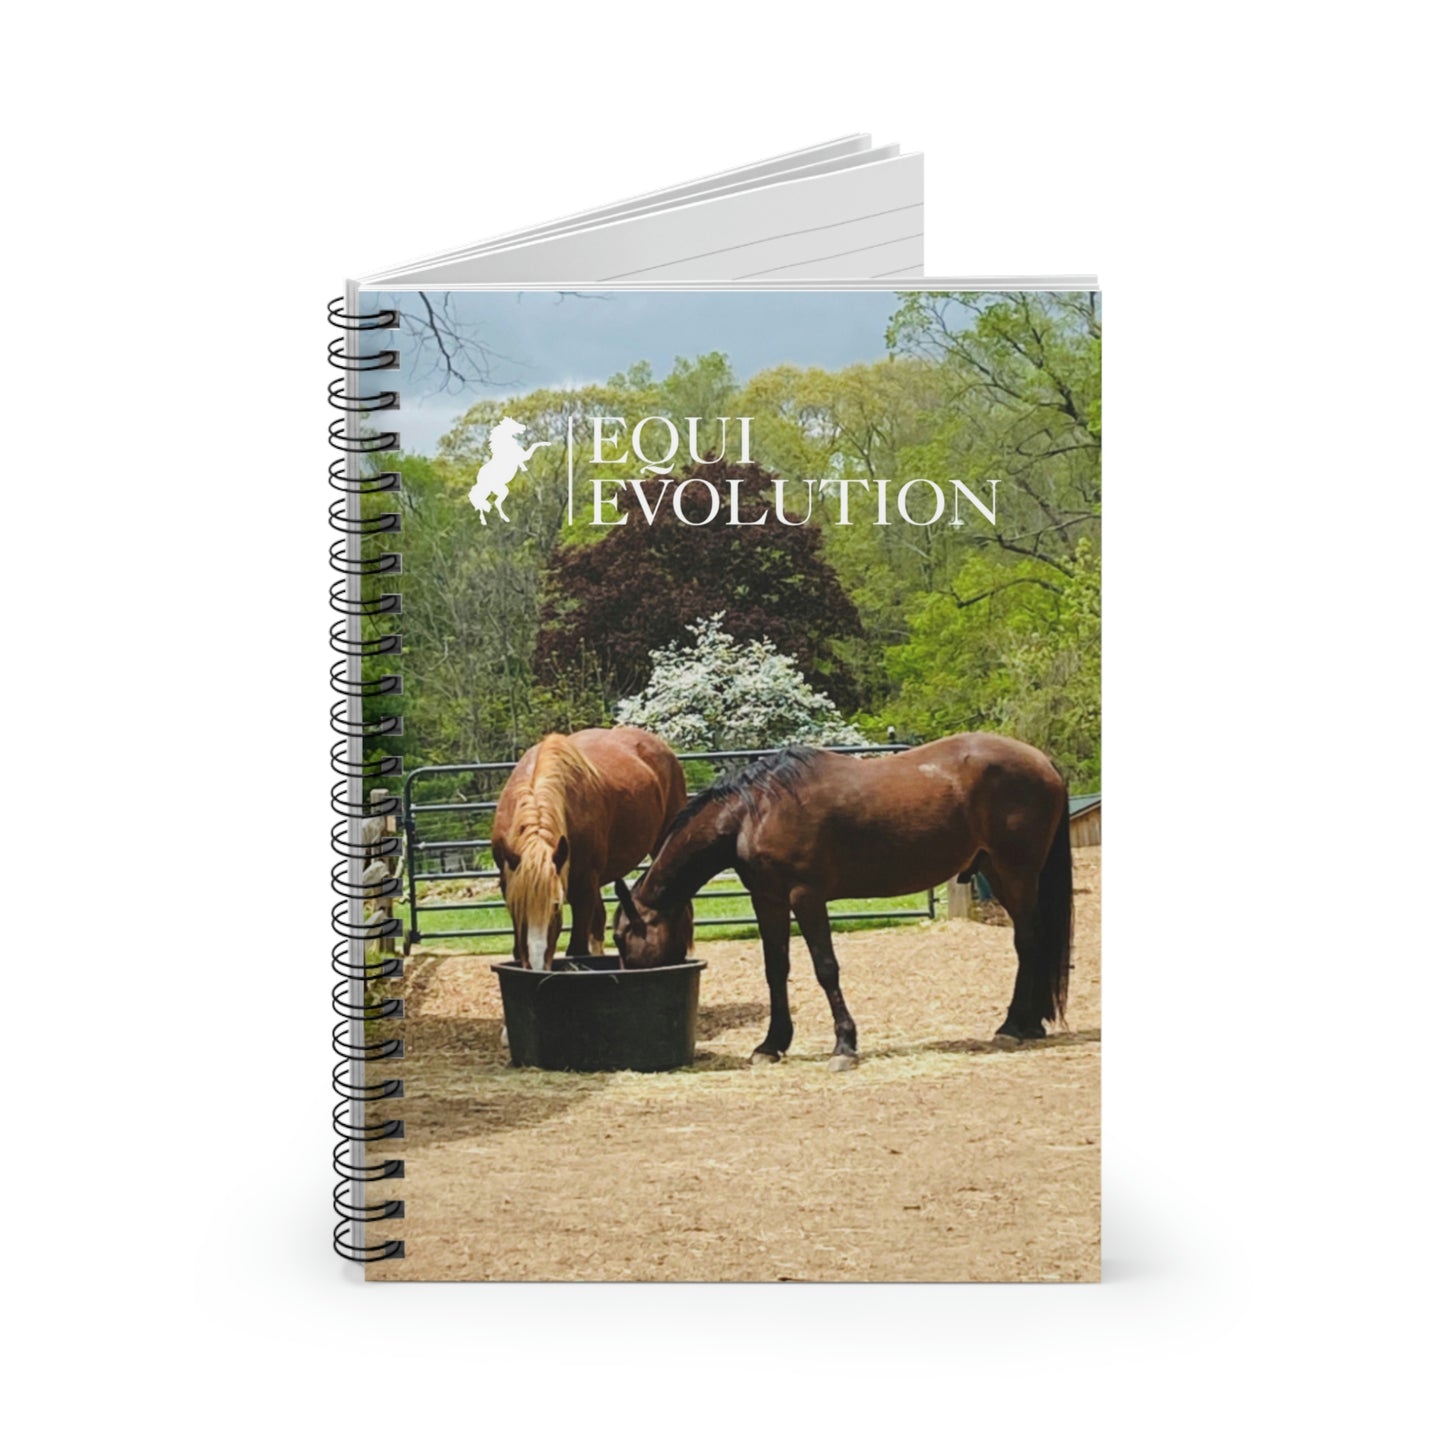 Equi Evolution Journal